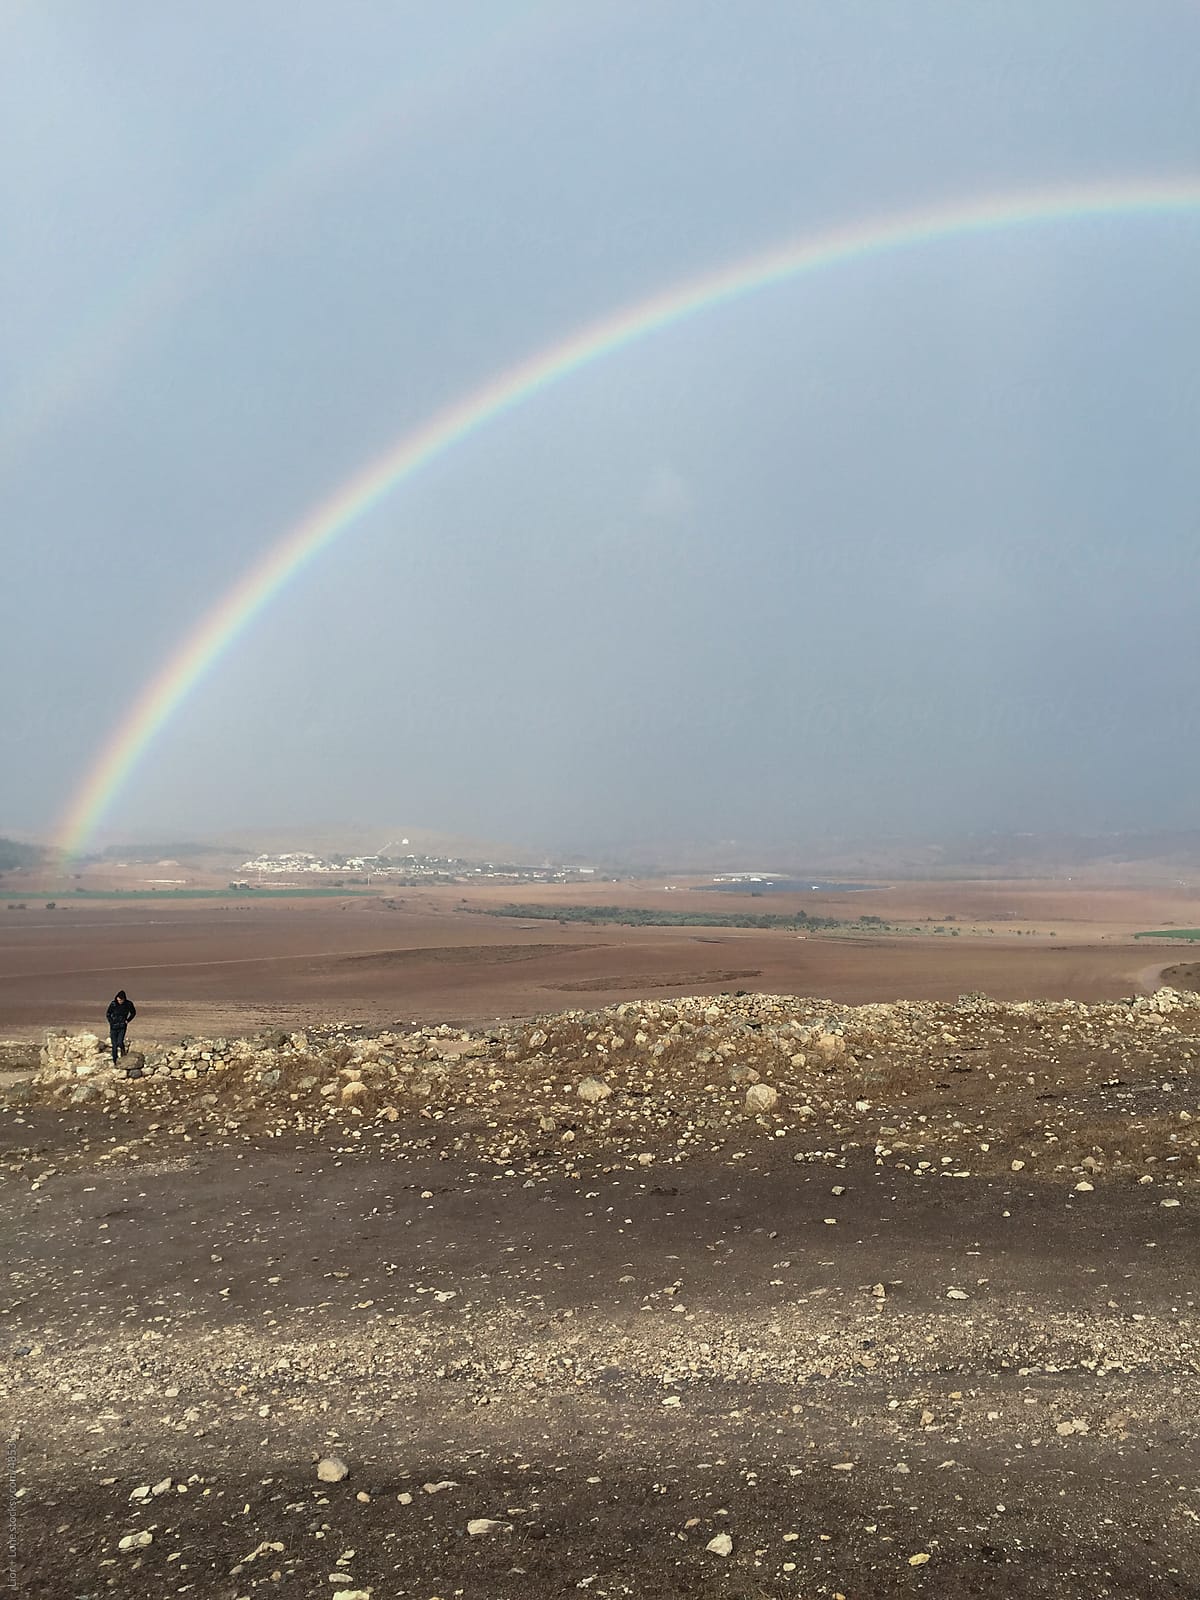 Man walking away from rainbow in a rural biblical landscape